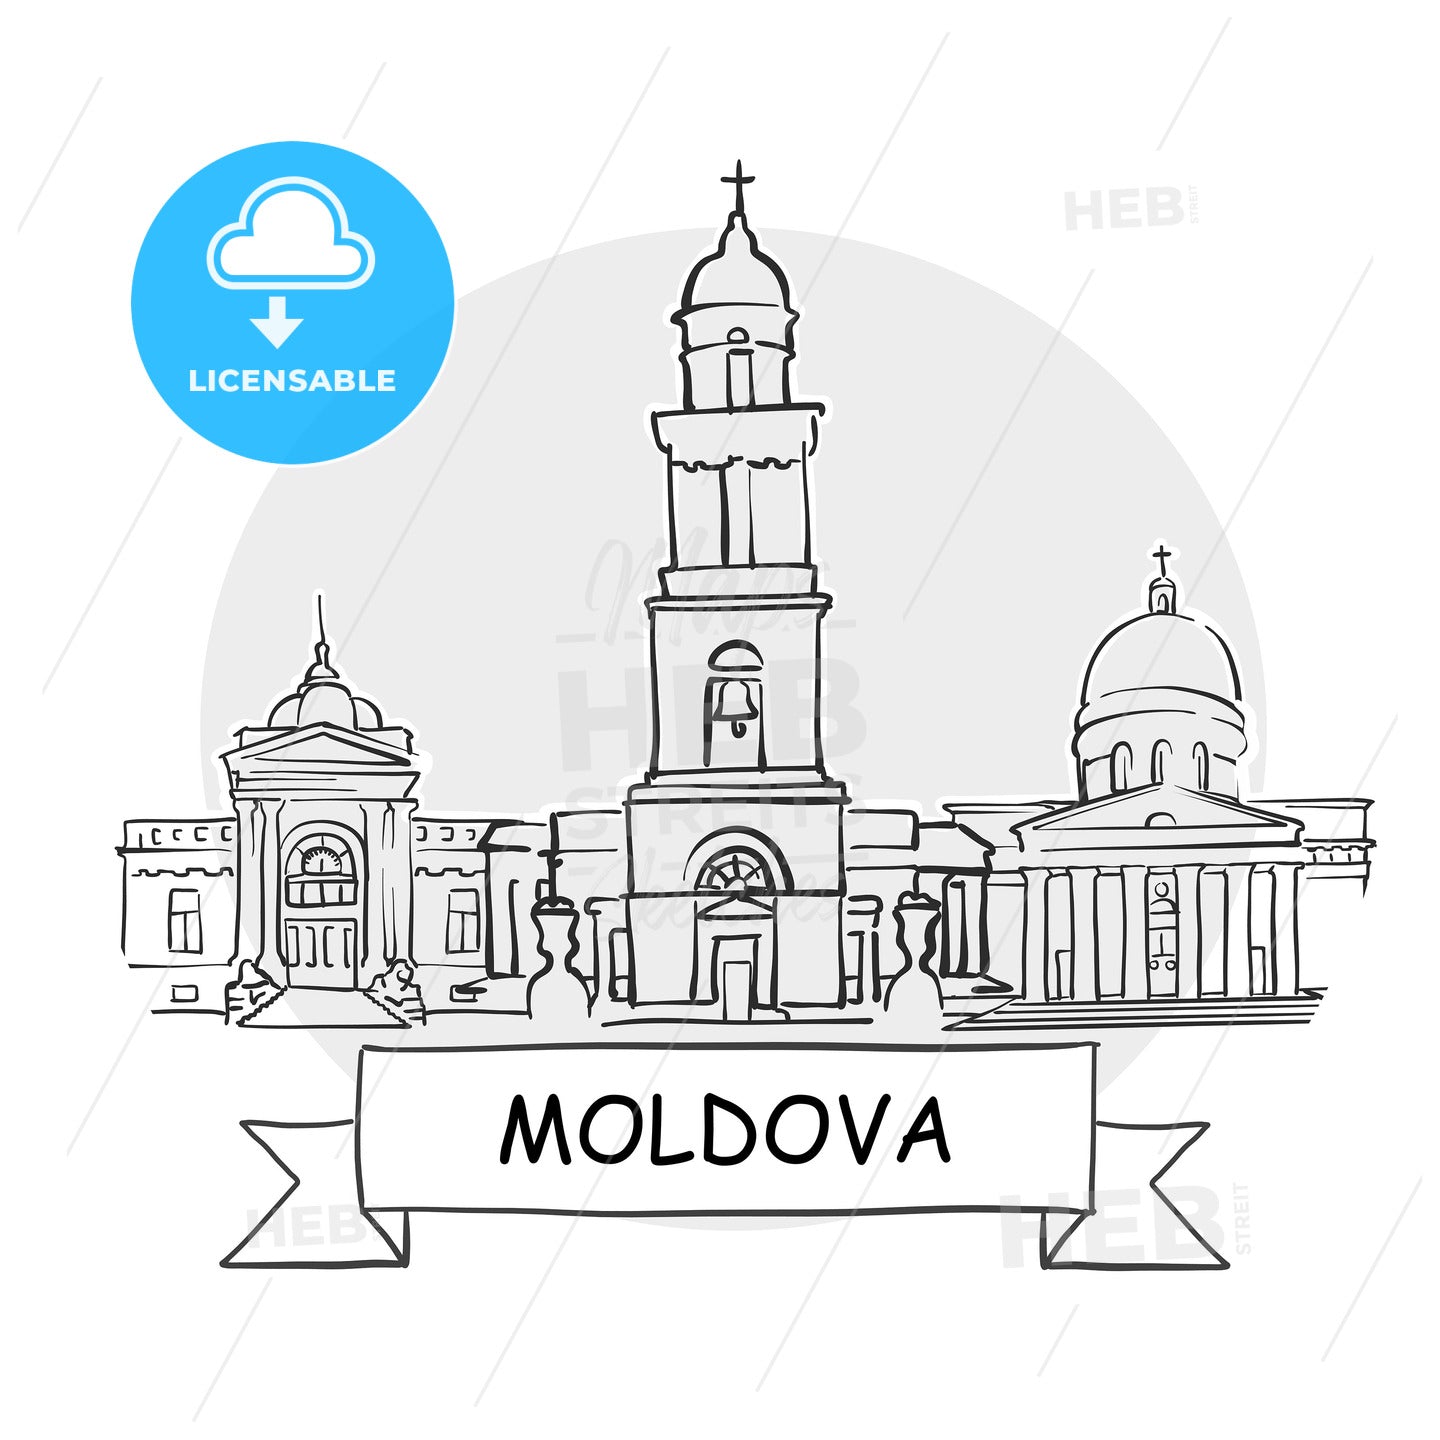 Moldova hand-drawn urban vector sign – instant download